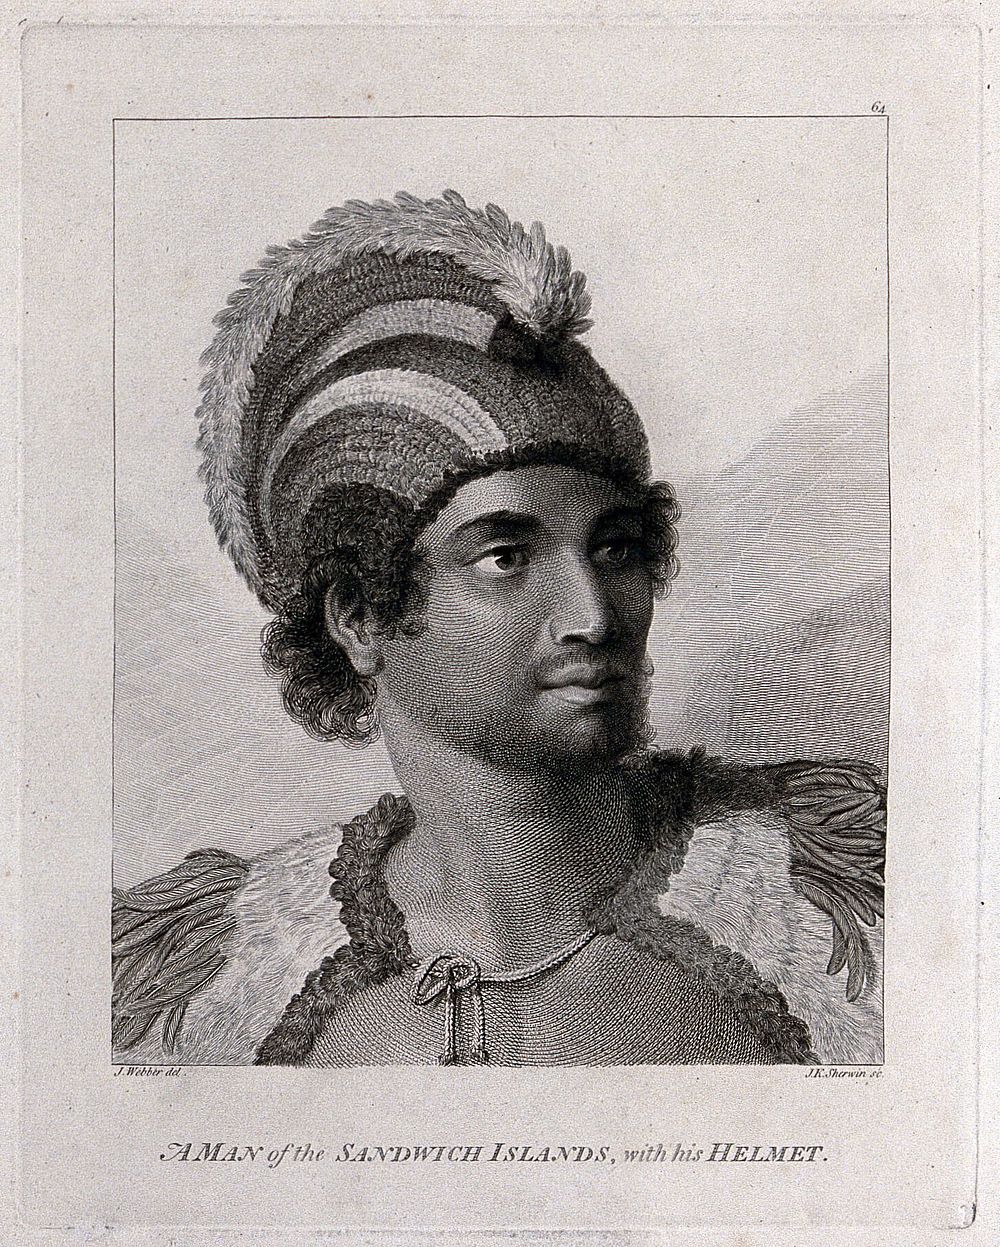 The Hawaiian chief Kana'ina (Kaneena) wearing a feather helmet. Engraving by J.K. Sherwin, 1784, after J. Webber.